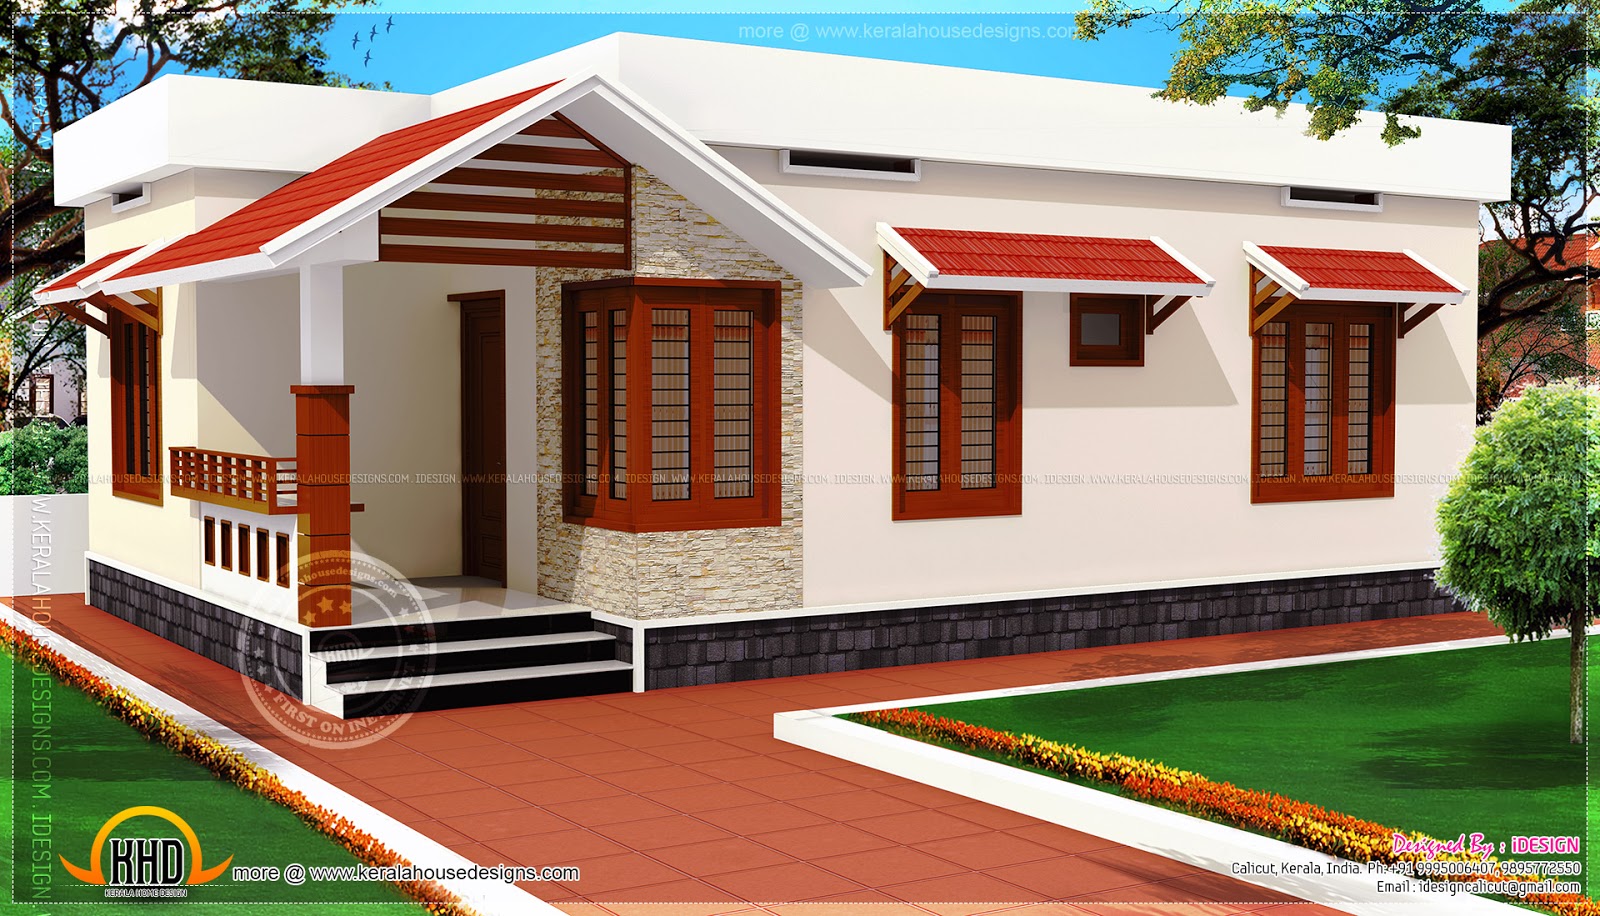  Low  cost  Kerala  home  design in 730 square feet Kerala  